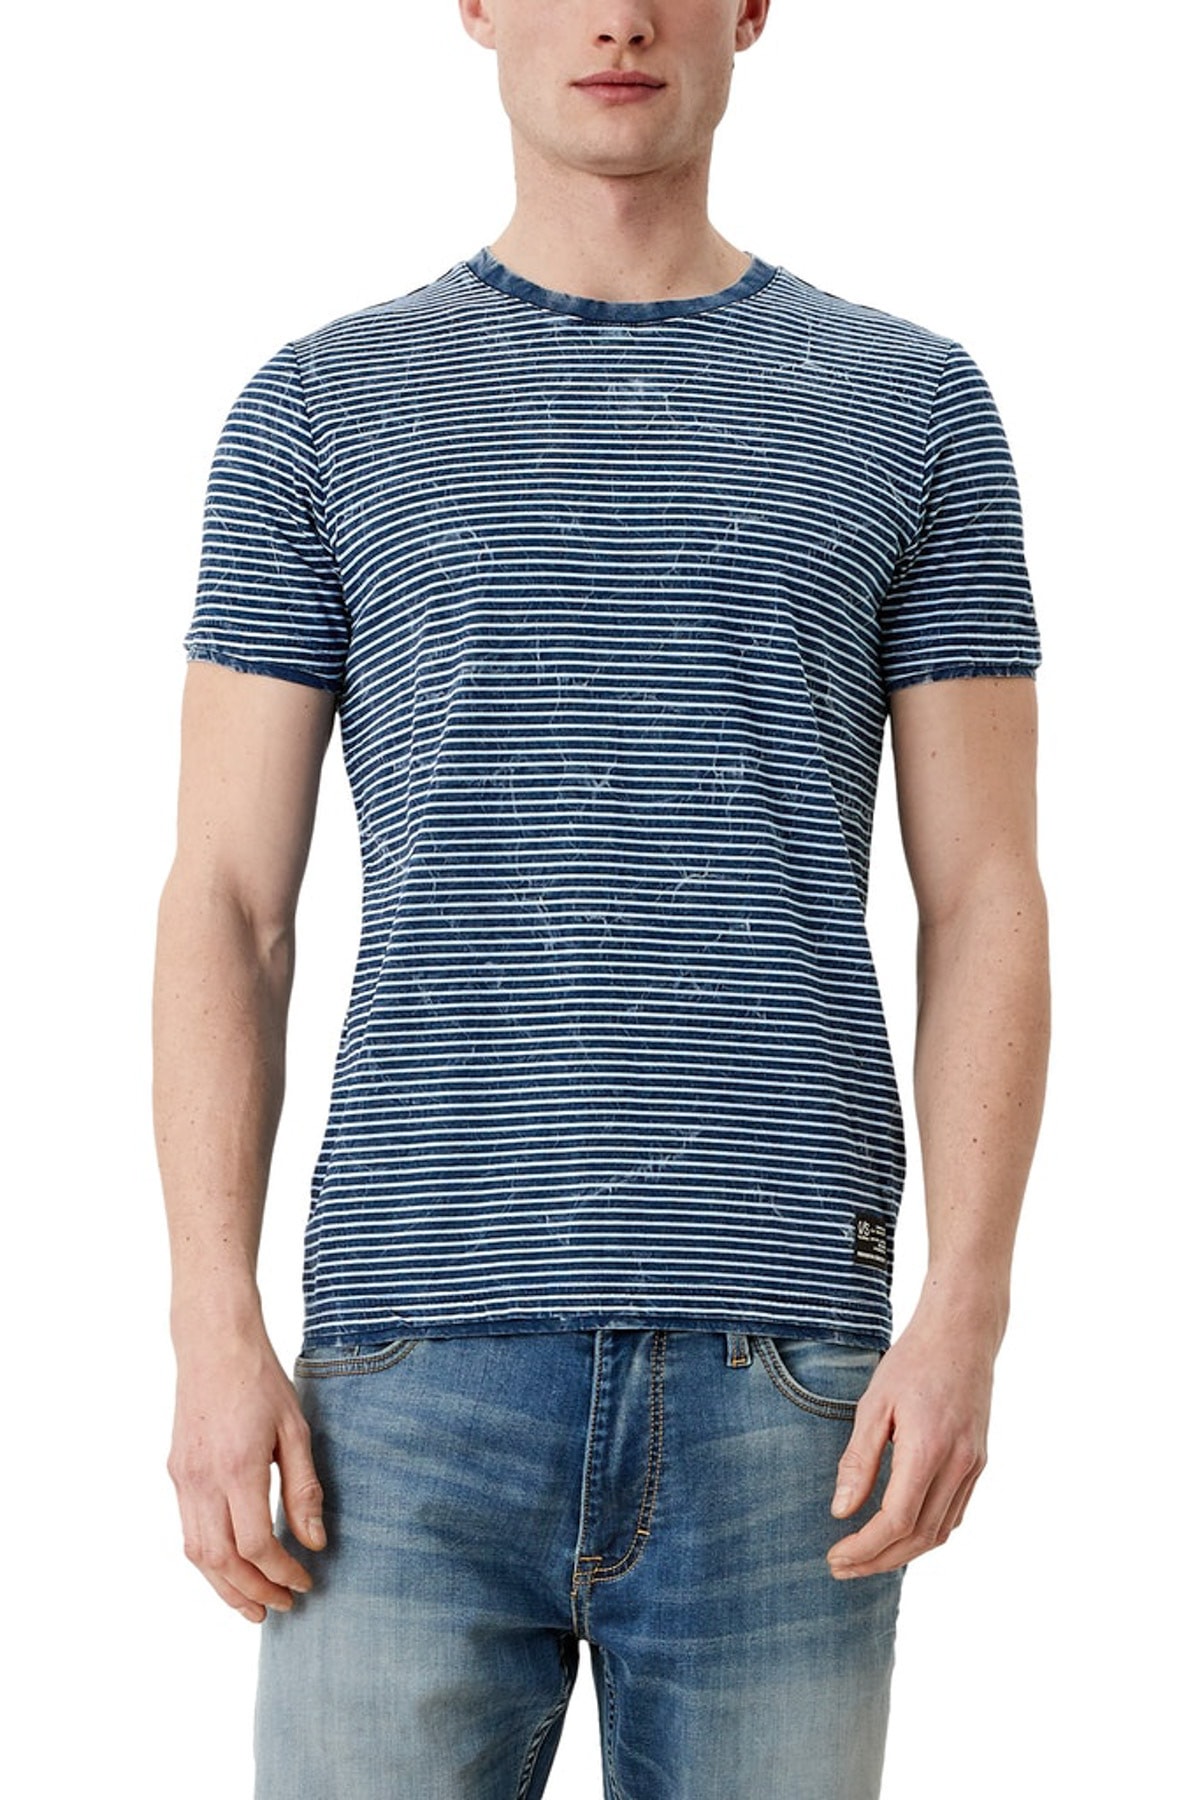 QS by s.Oliver T-Shirt Blau Regular Fit